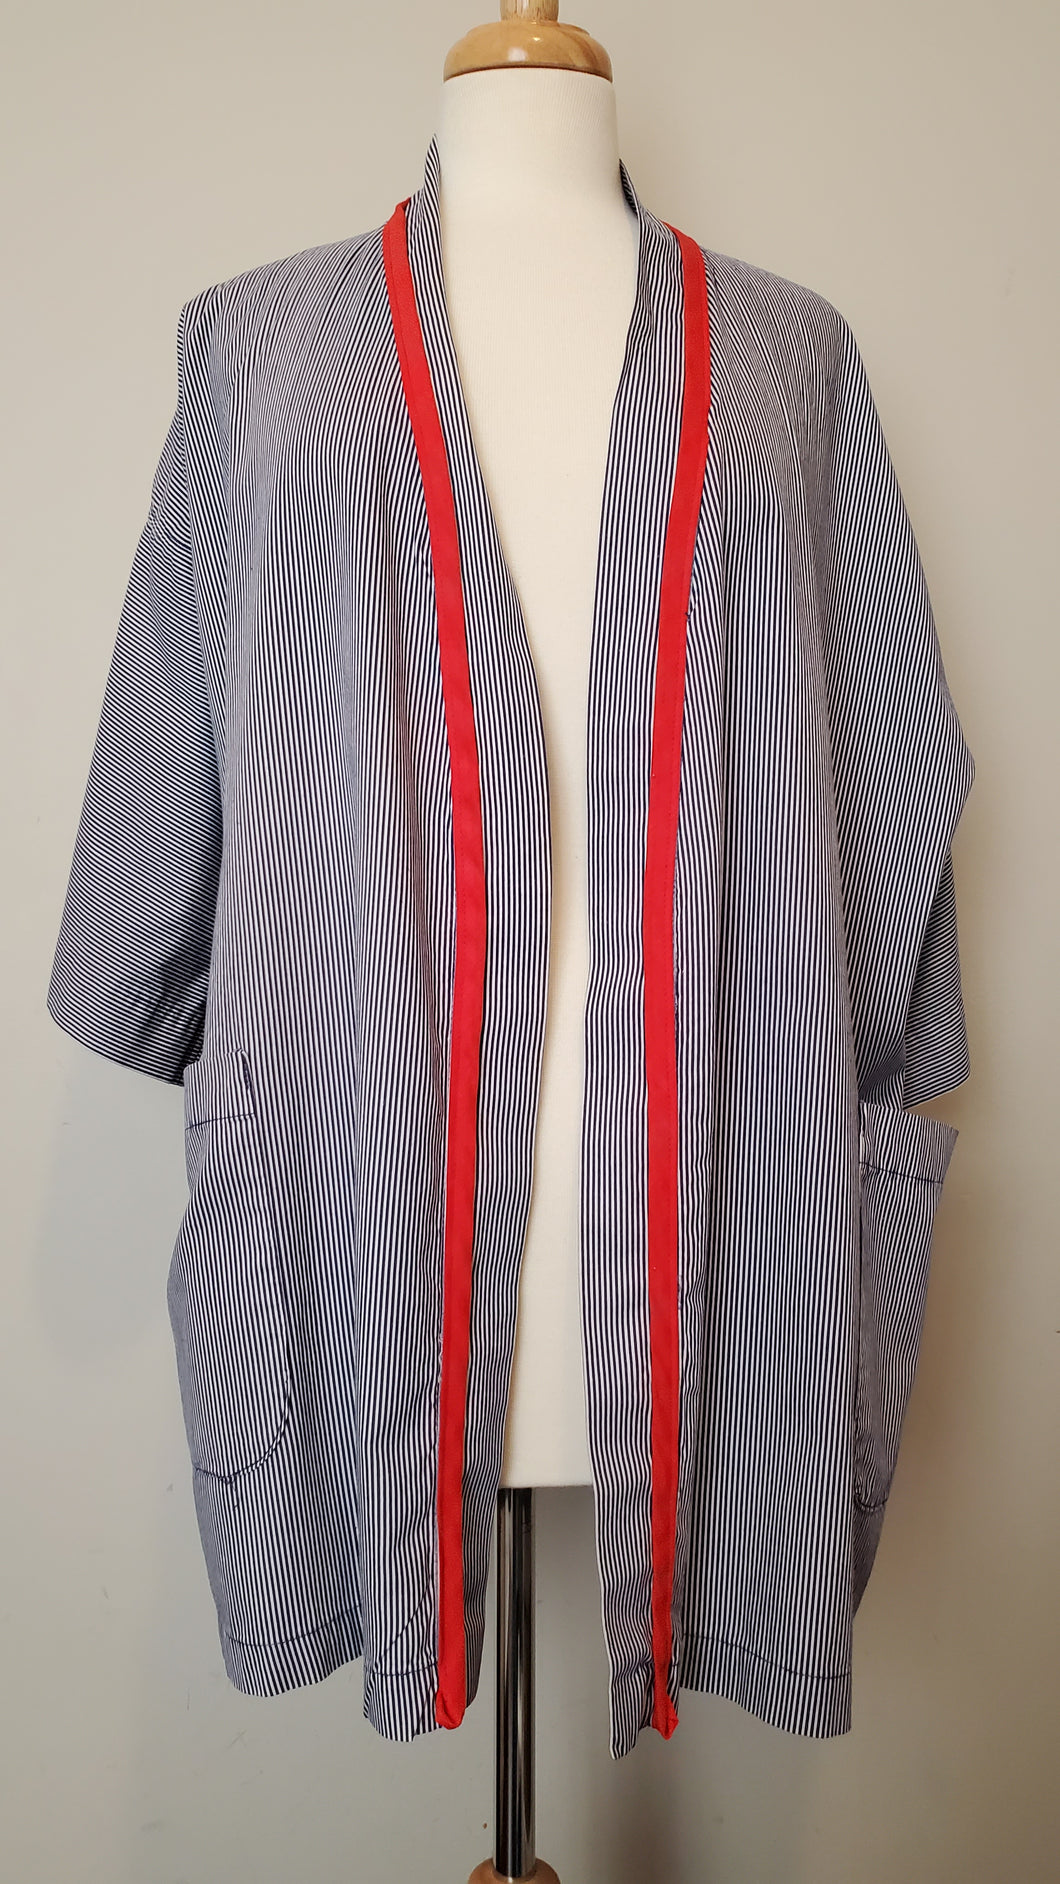 Neiman Marcus Striped Robe